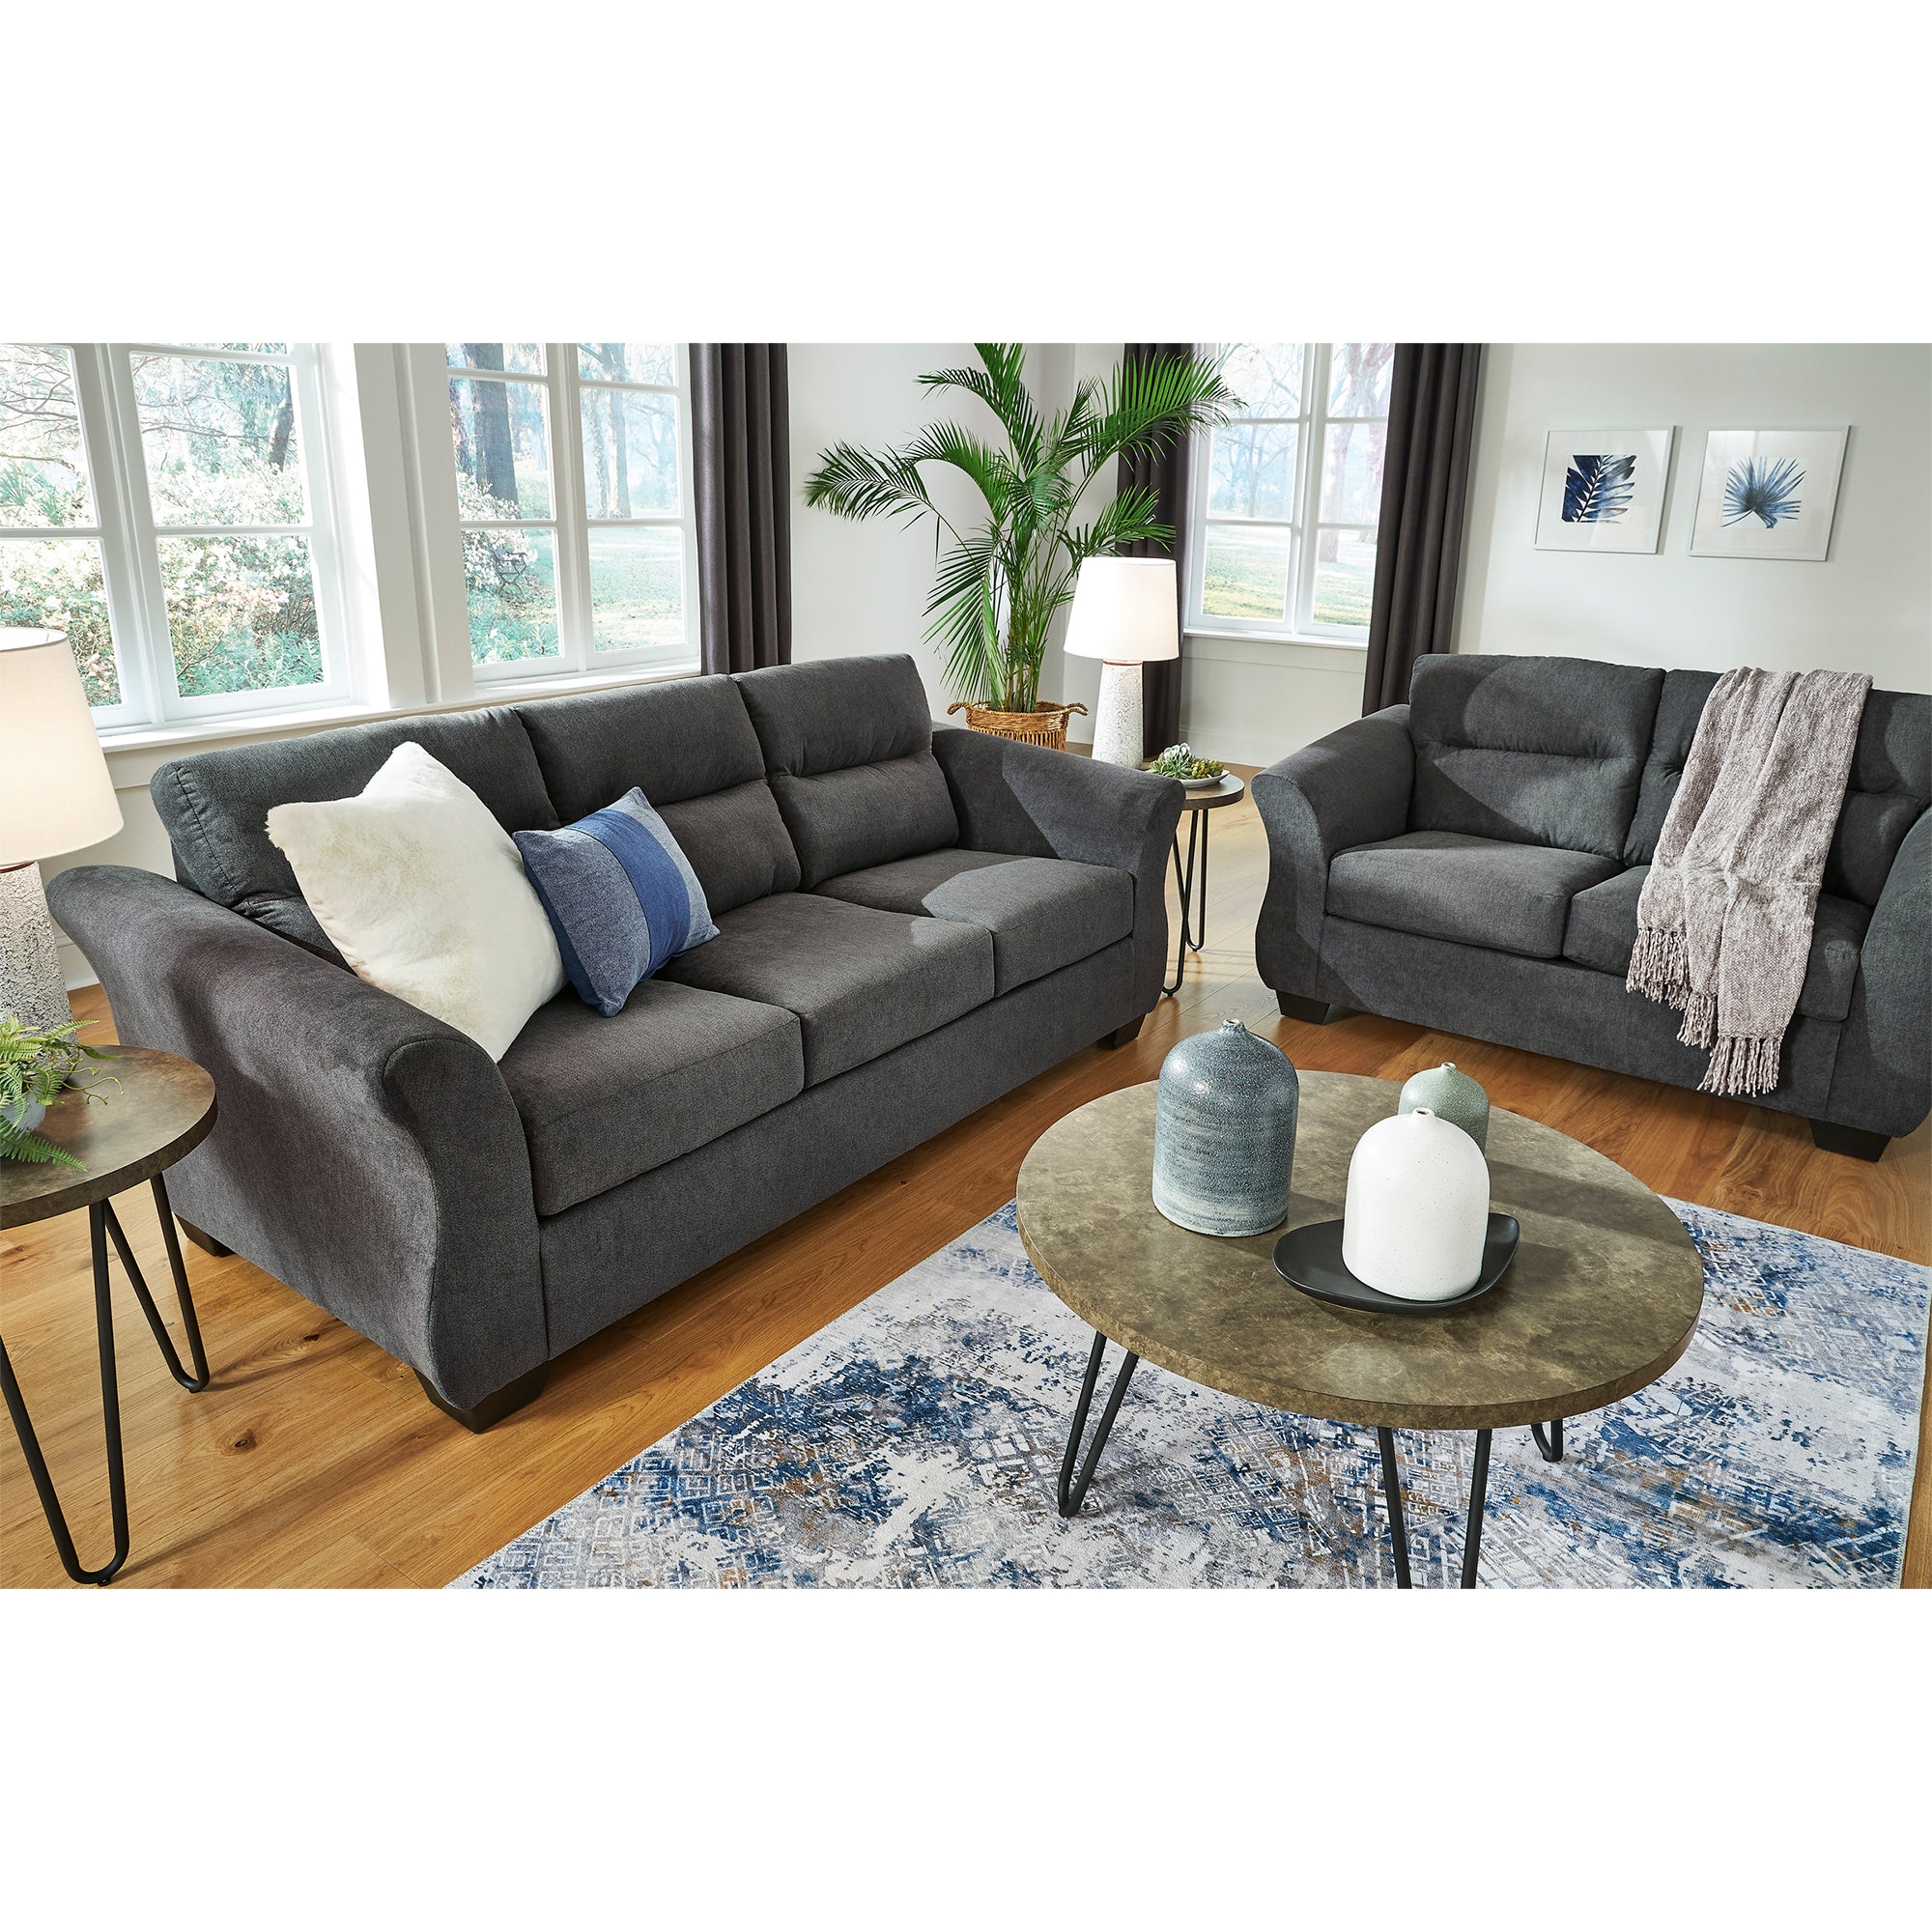 Miravel Sofa